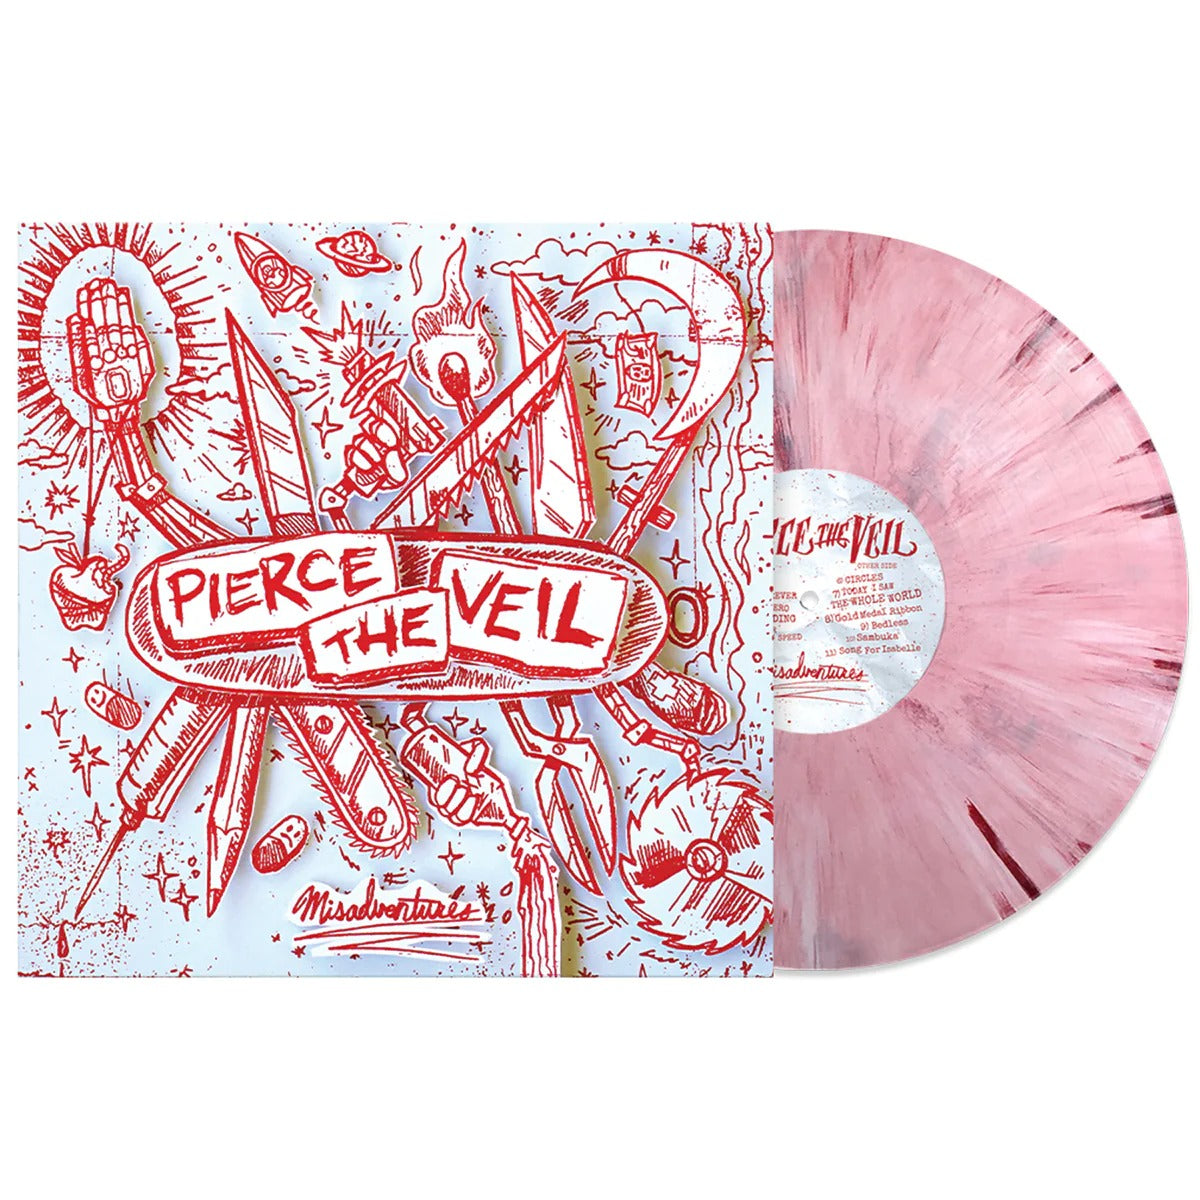 Pierce The Veil - Misadventures LP (Pink w/ Red Splatter Vinyl, Limited to 500, LIMIT 1 PER CUSTOMER)